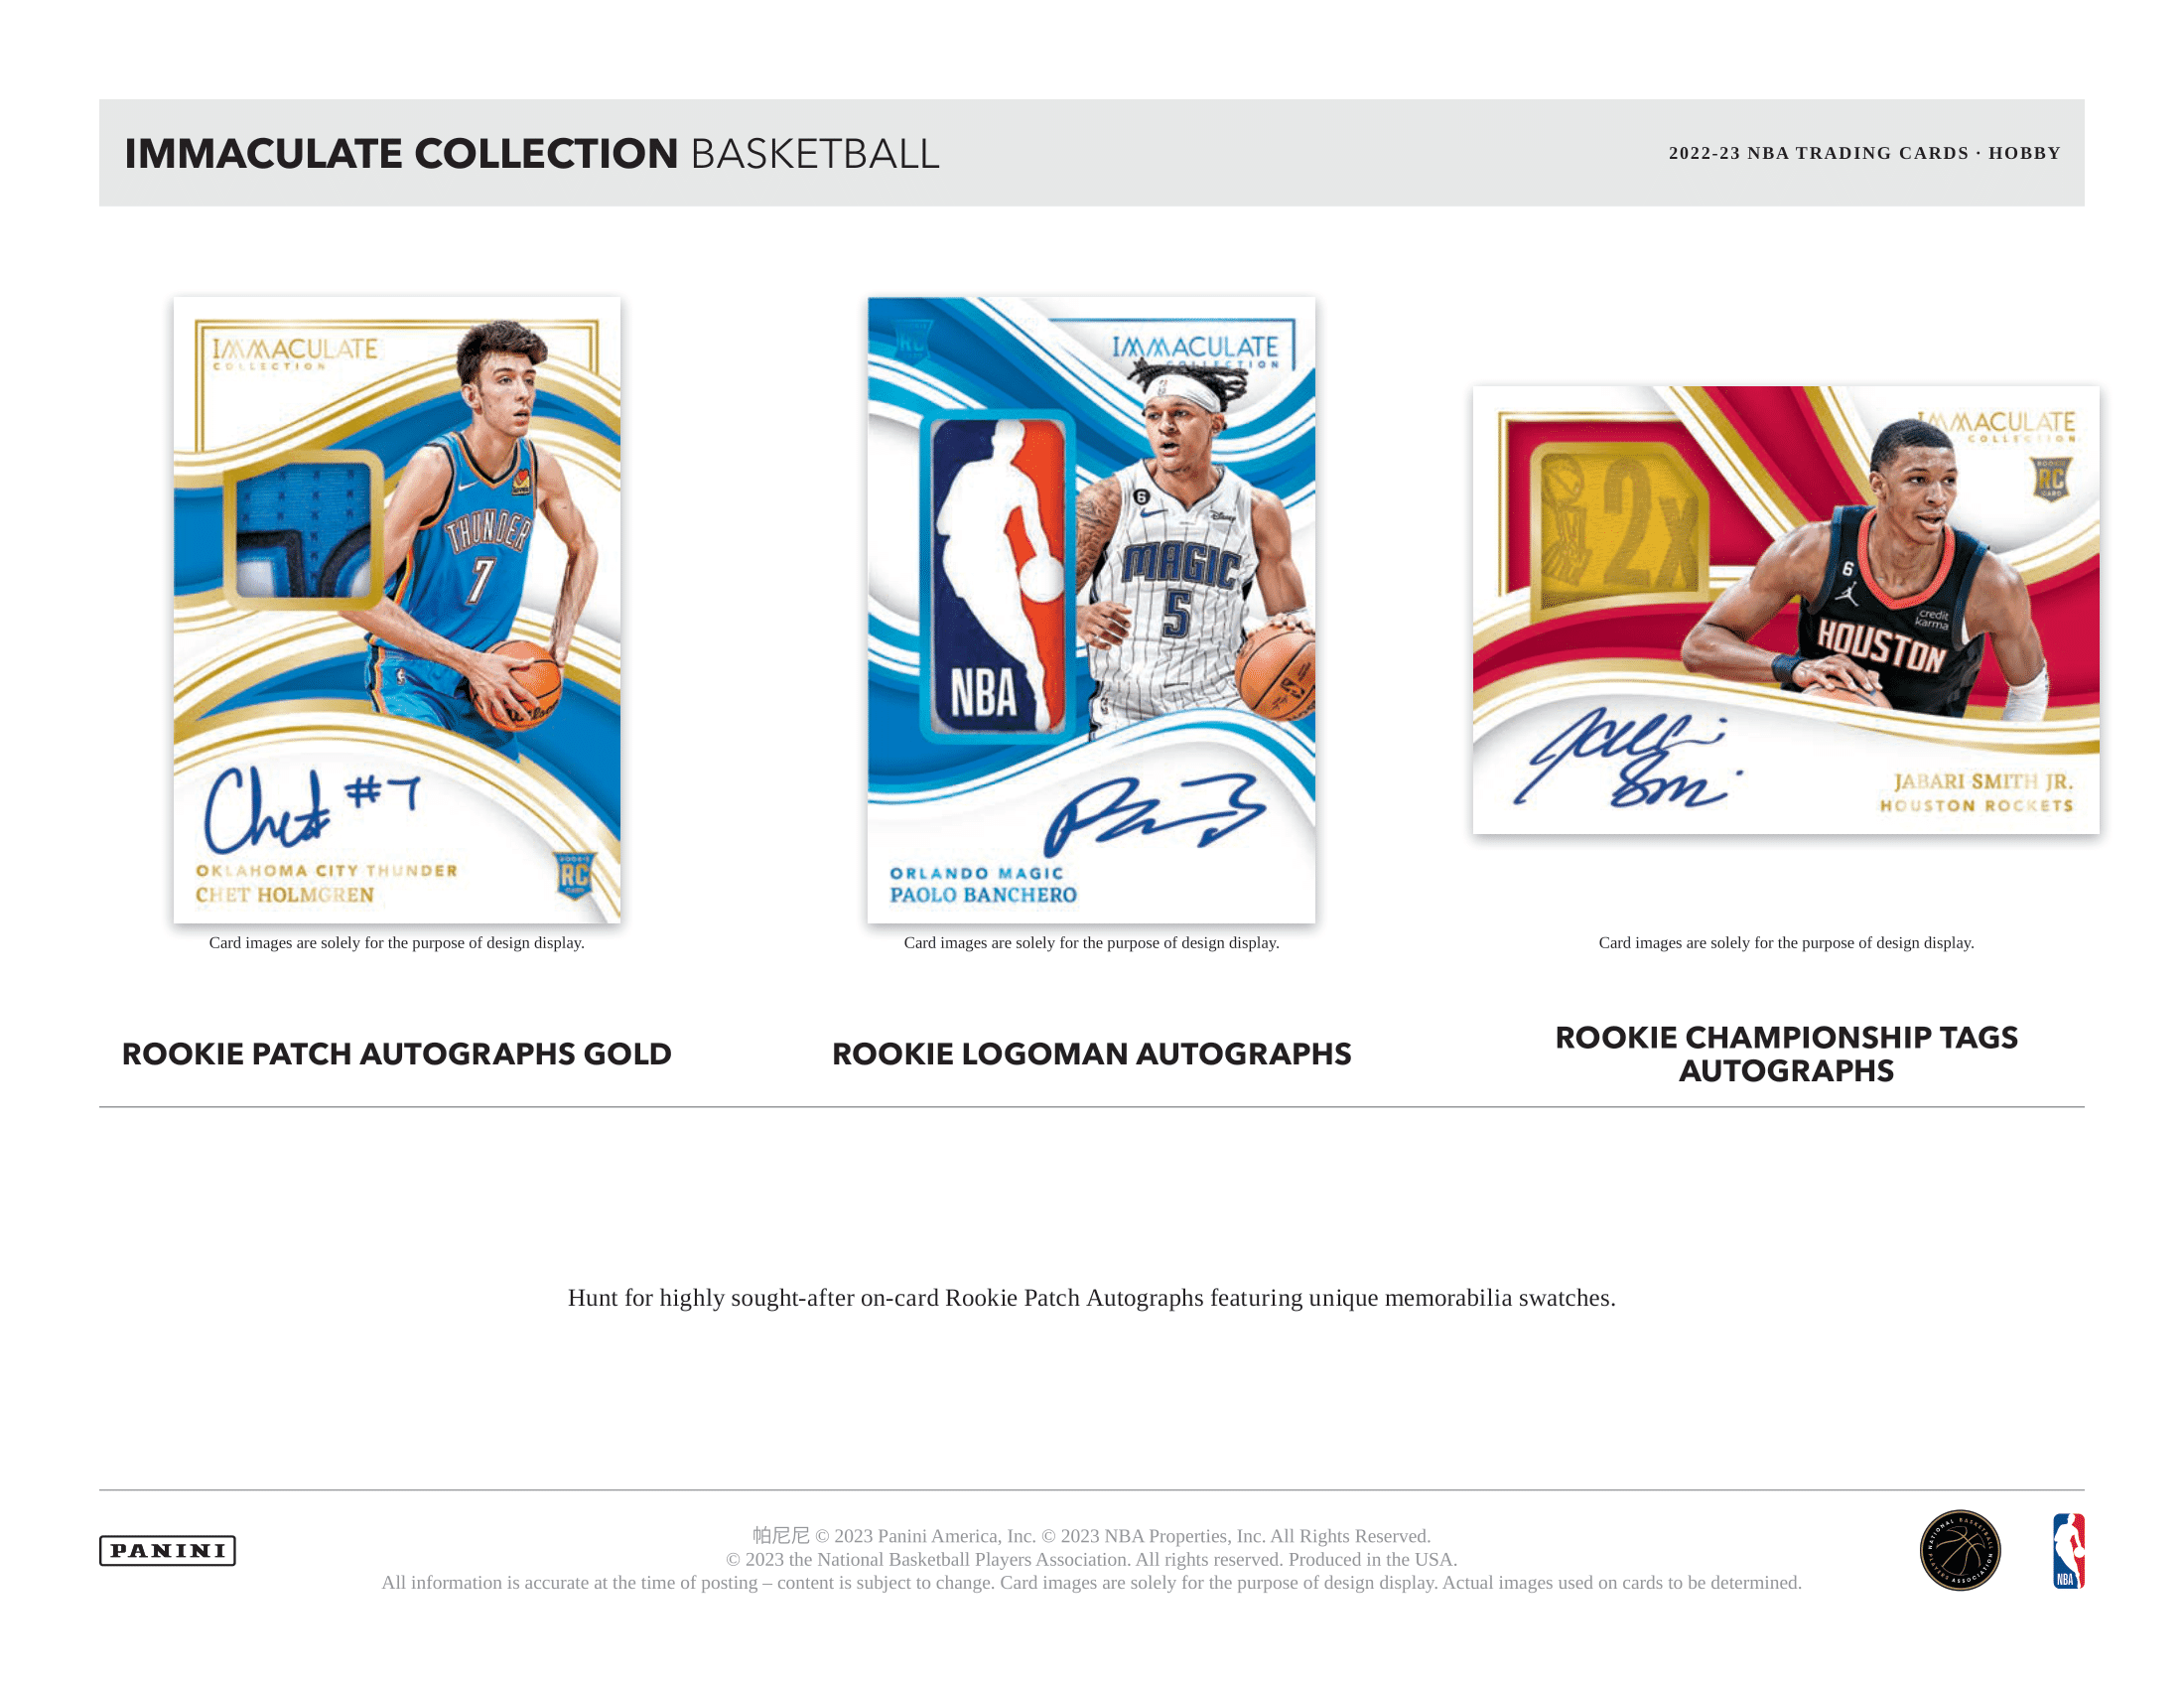 Panini - 2022/23 Immaculate Collection Basketball (NBA) - Hobby Box - The Card Vault